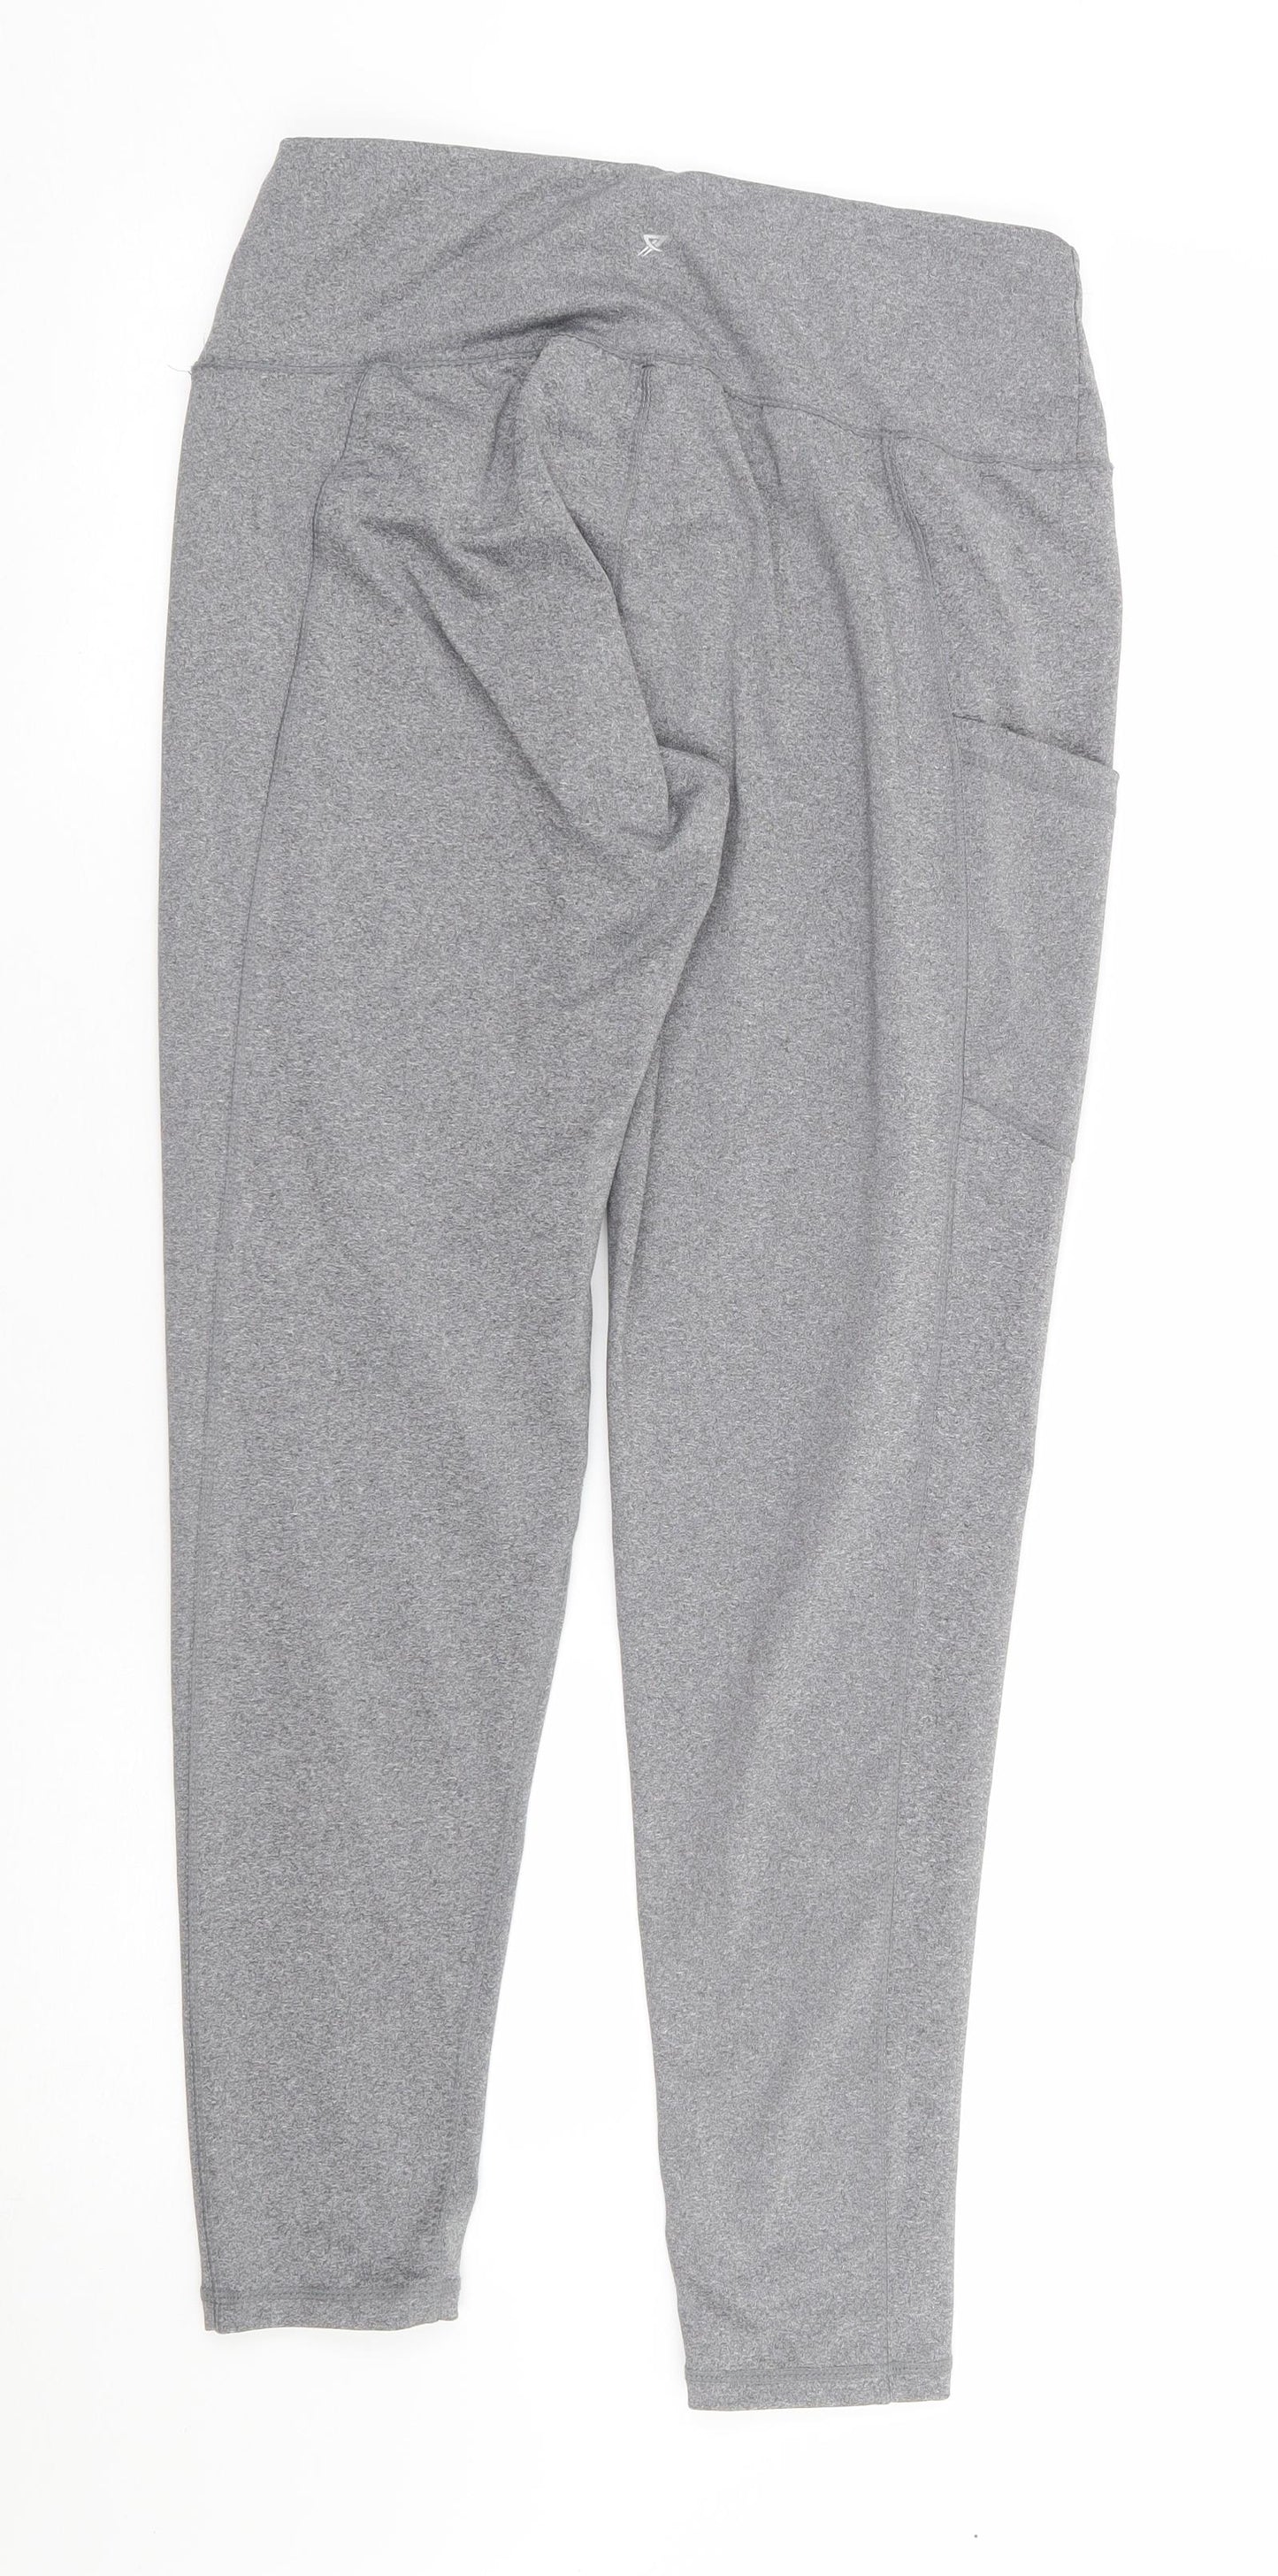 Primark Womens Grey Polyester Track Pants Leggings Size S L27 in Regular